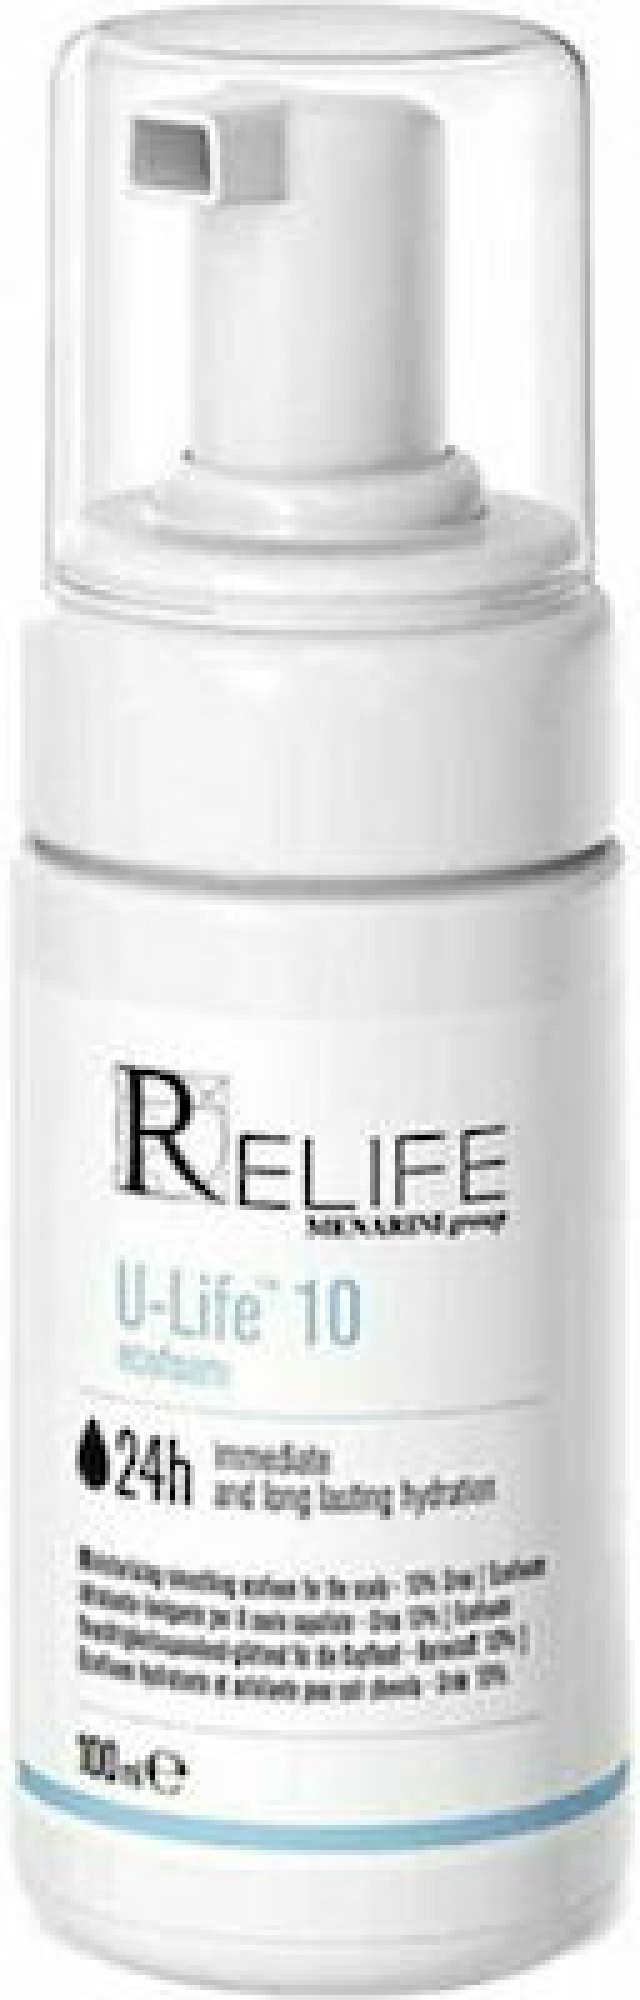 Relife U-Life 10 Lotion κατά της Ξηροδερμίας για Ξηρά Μαλλιά, 100ml